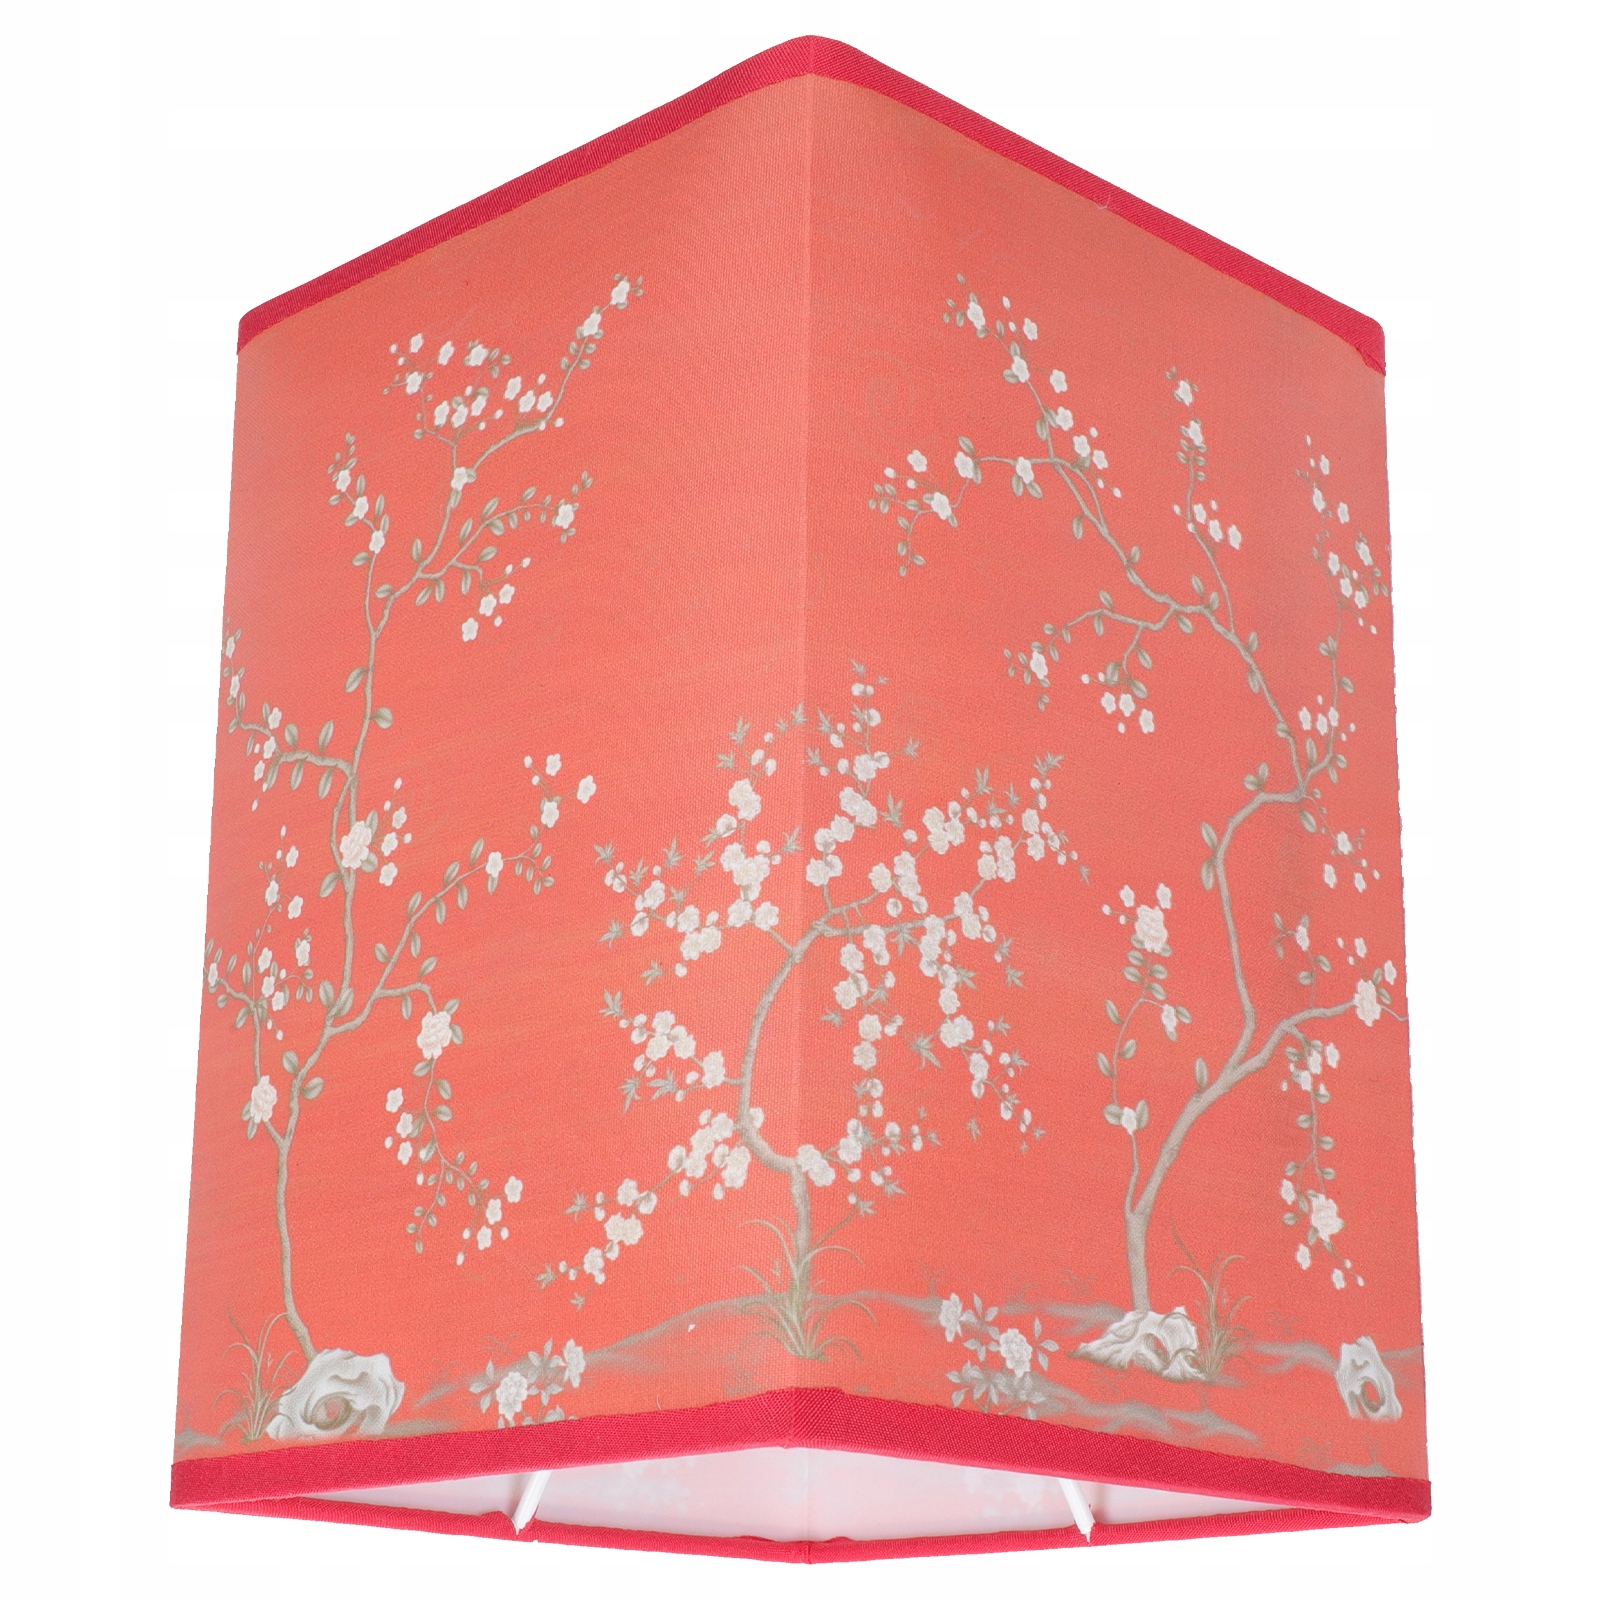 Tieň pre chinoiserie dekoráciu lampa pokrýva stolovú lampu